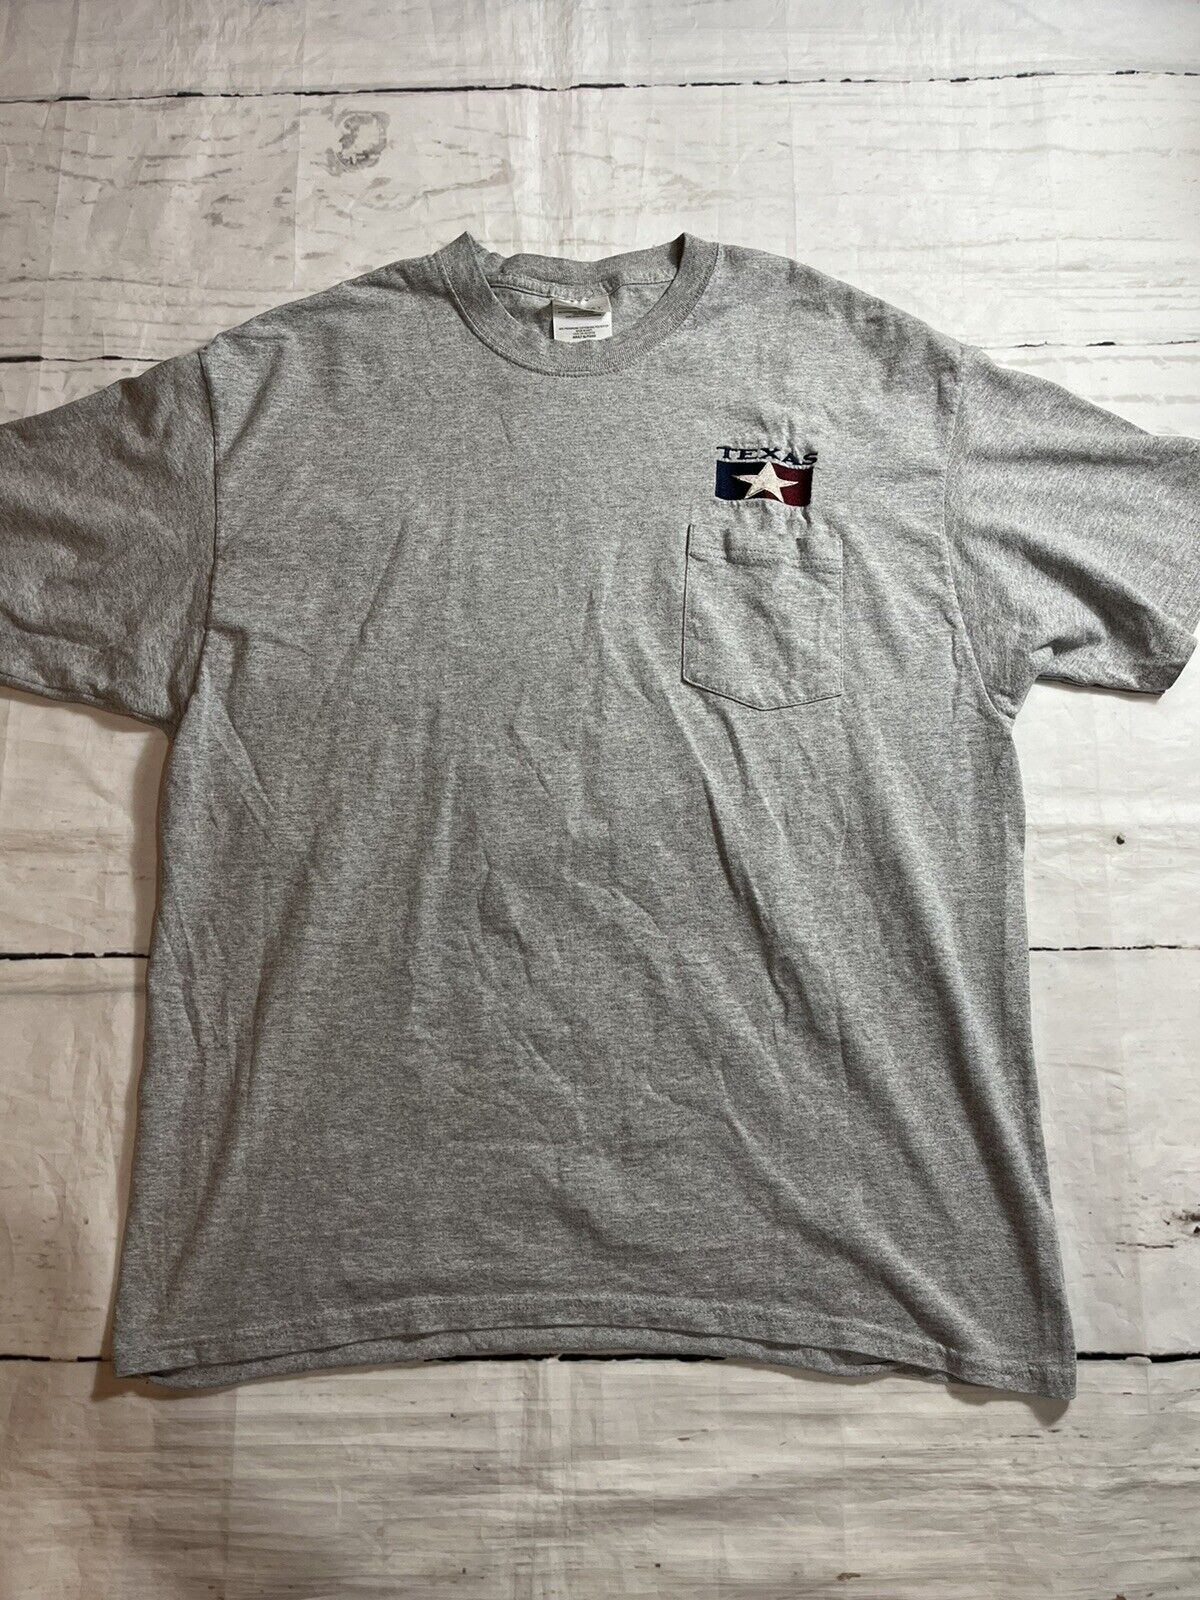 Vintage Texas Pocket T Shirt Tee Single Stitch Embroidered XL USA 90s Austin